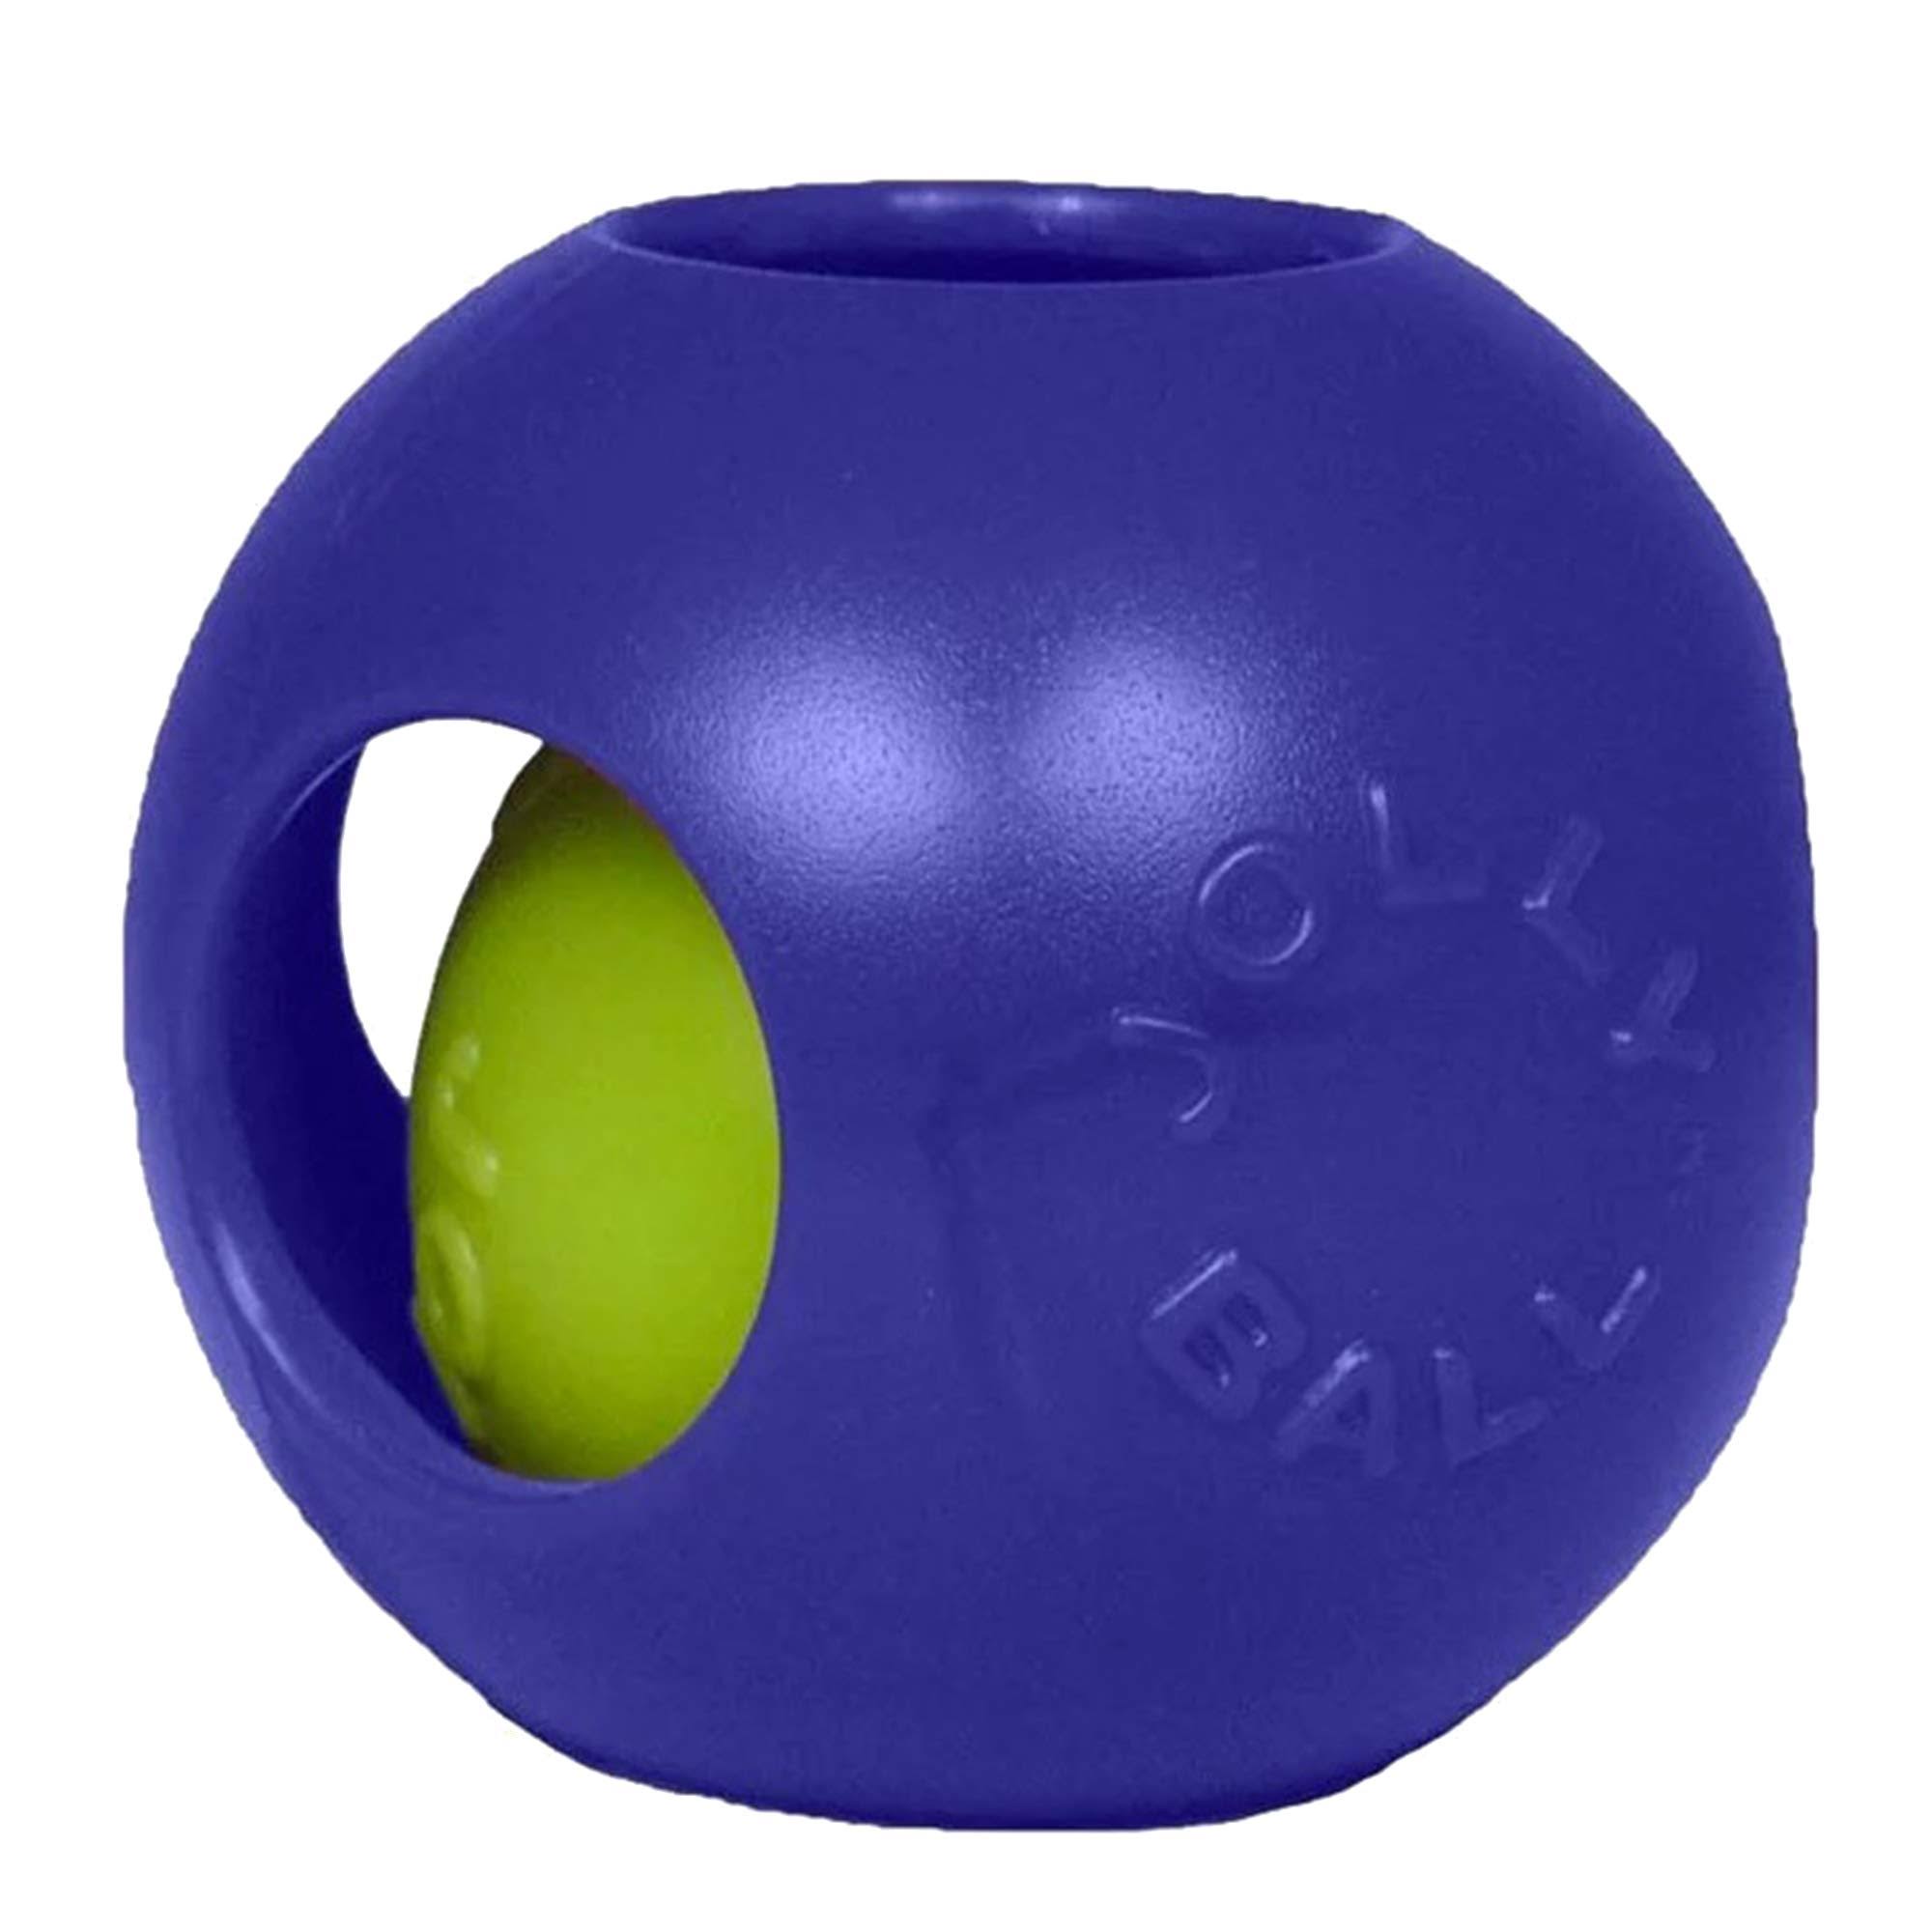 Jolly Pets Teaser Ball Dog Toy - Blue, 6"